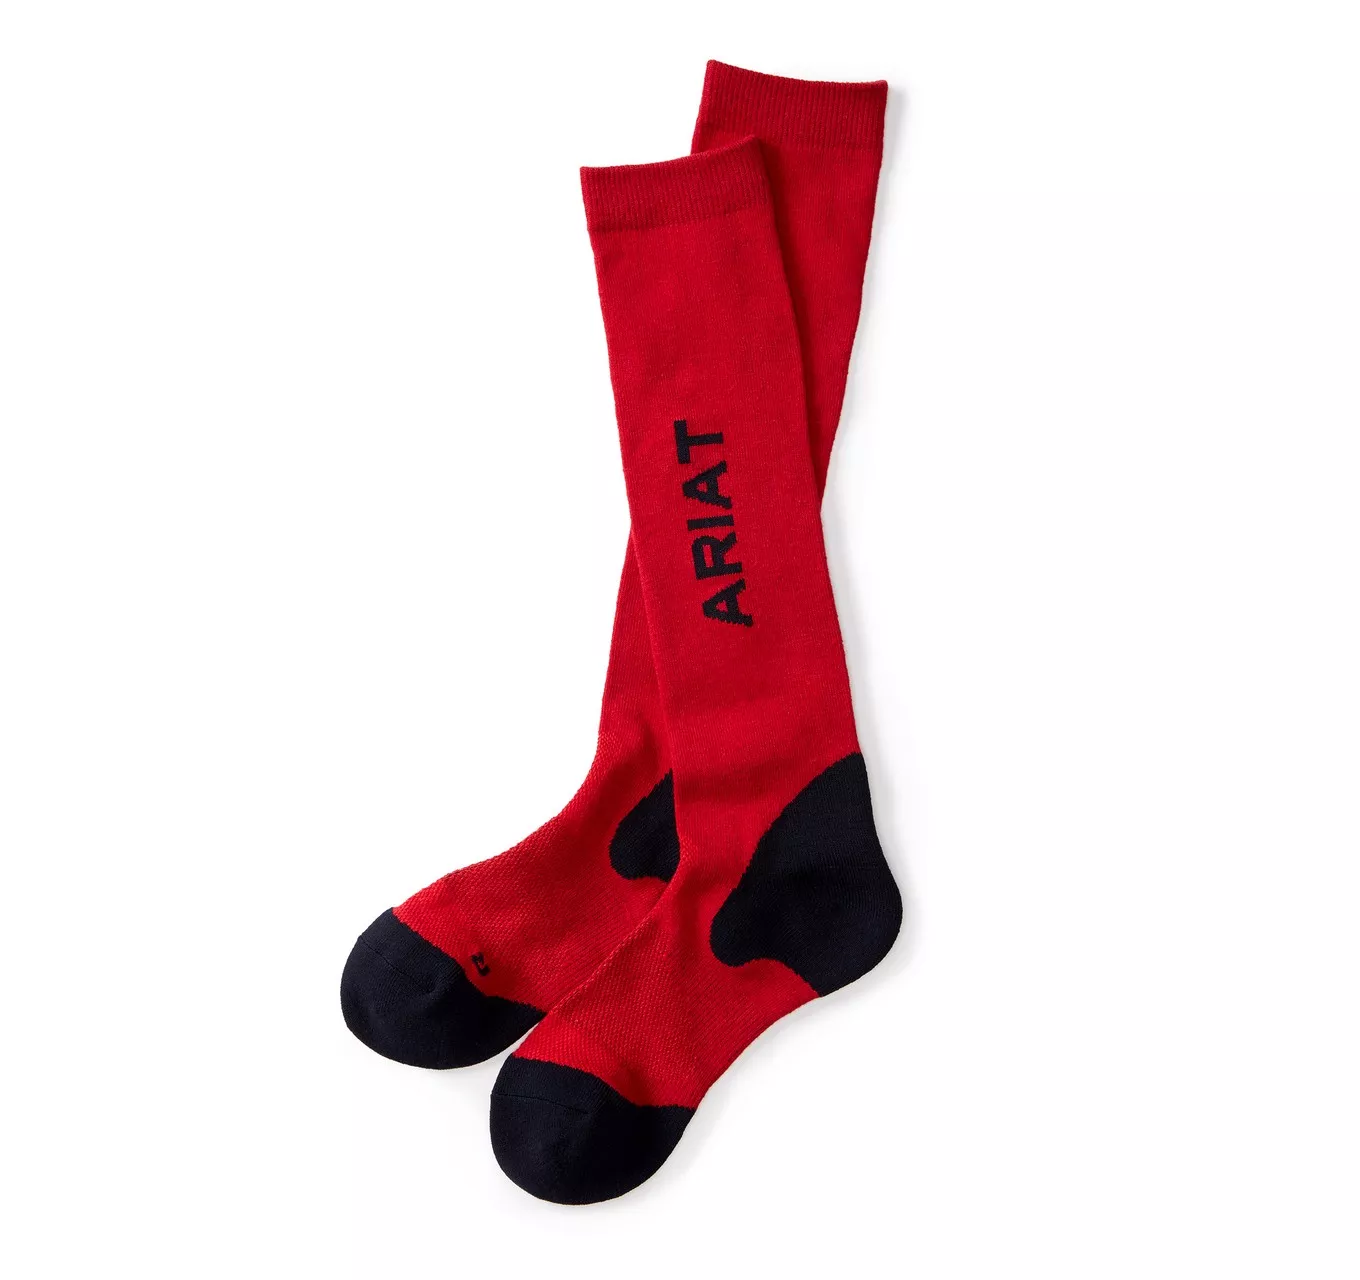 AriatTek Performance Socks Navy/Red